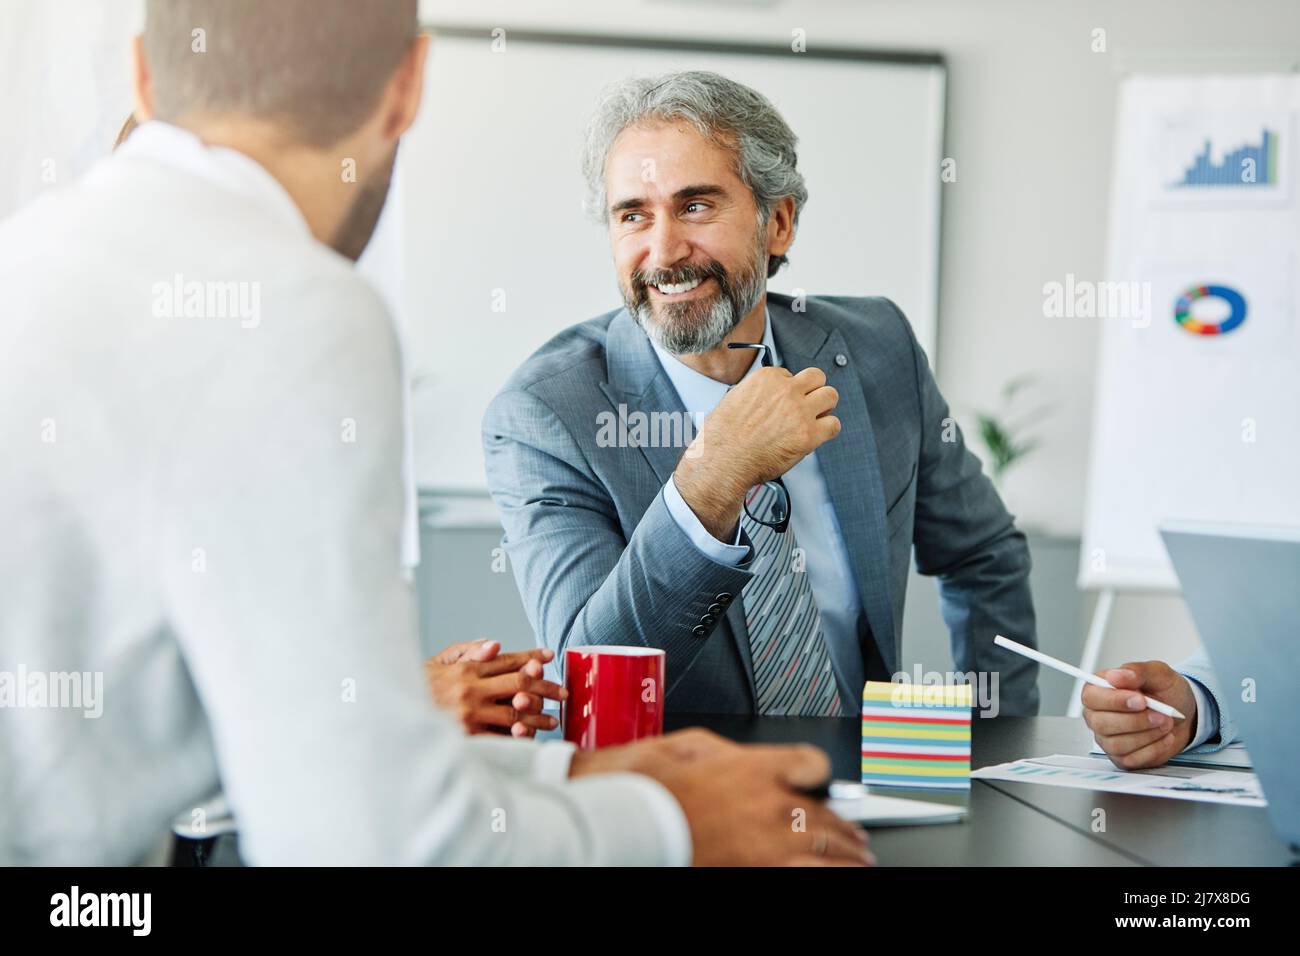 senior businessman office work business meeting mature gray hair portrait happy lawyer entrepreneur Stock Photo